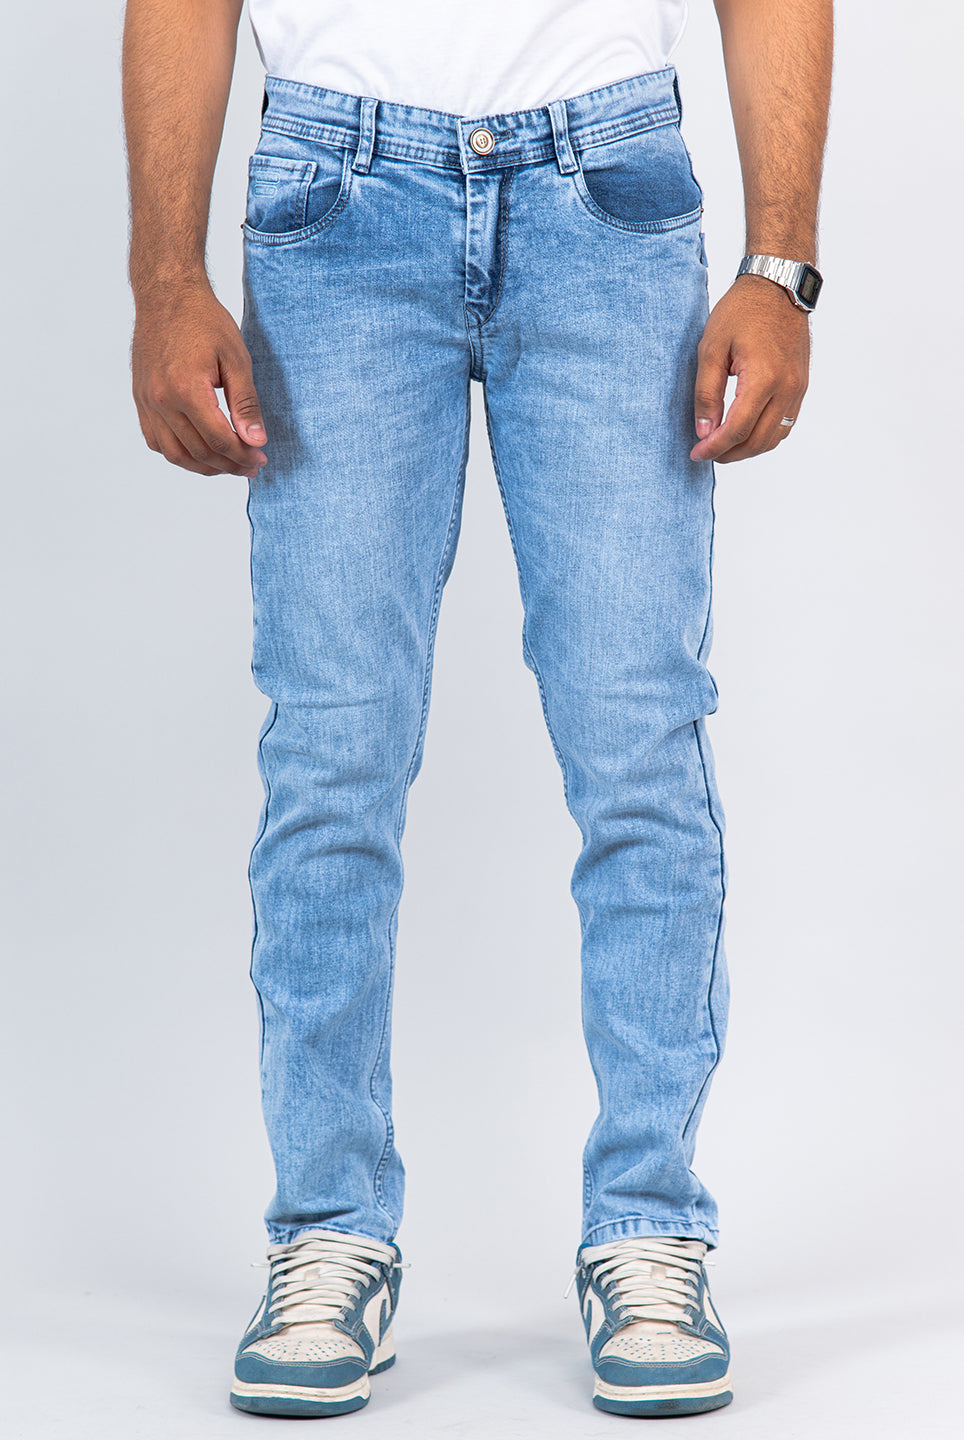 light blue denim jeans